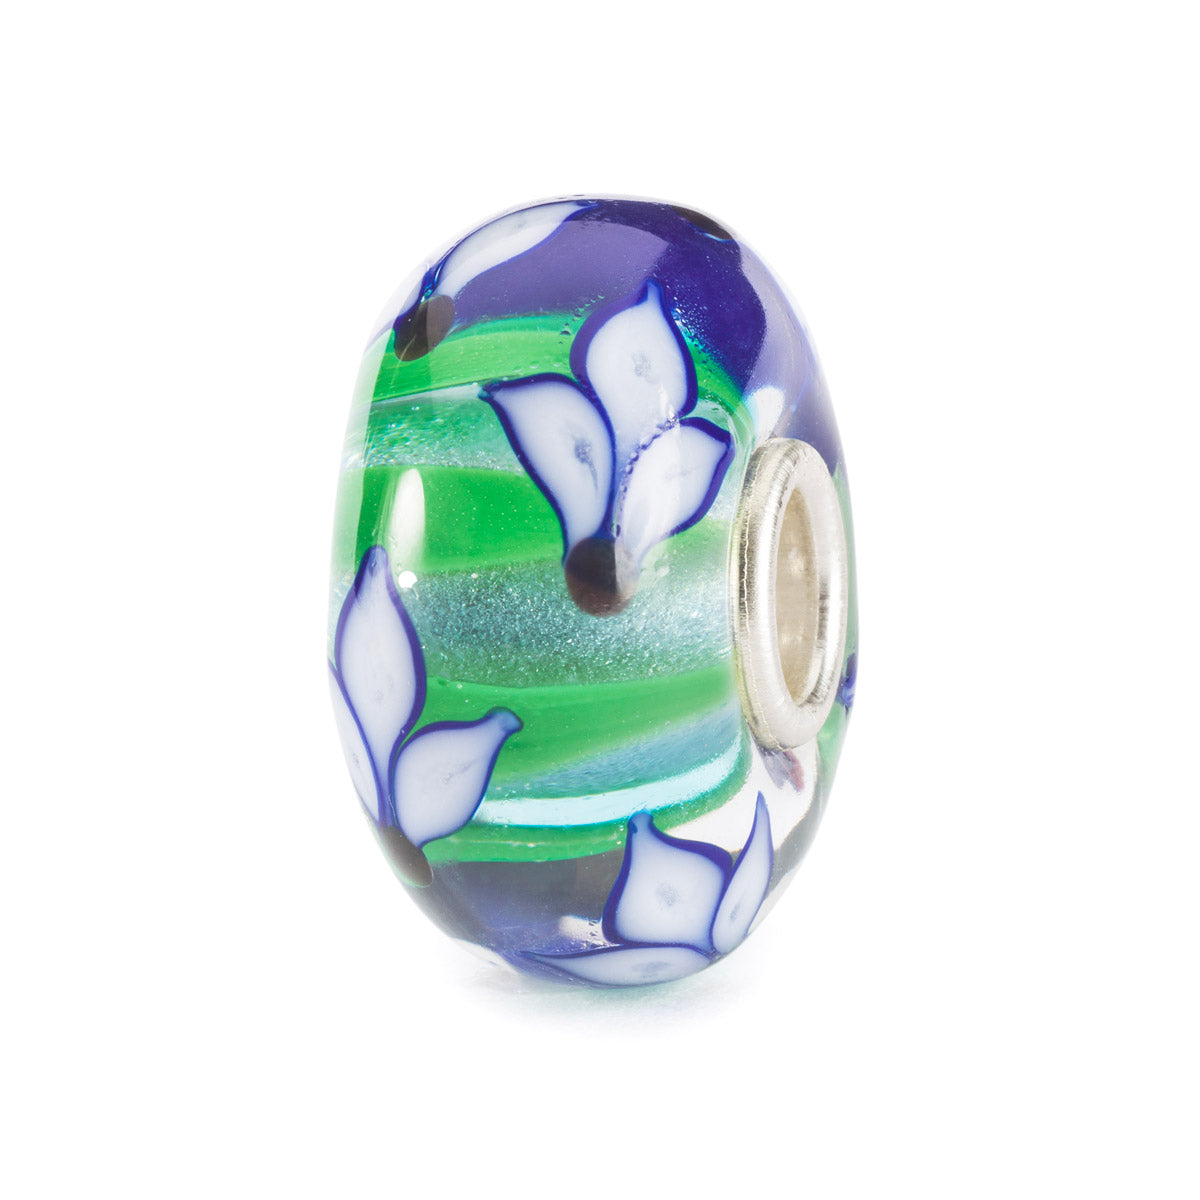 Iris Blu Trollbeads | Beads in vetro verde con nuance blu e fiorellini con petali bianchi. | TGLBE-20384